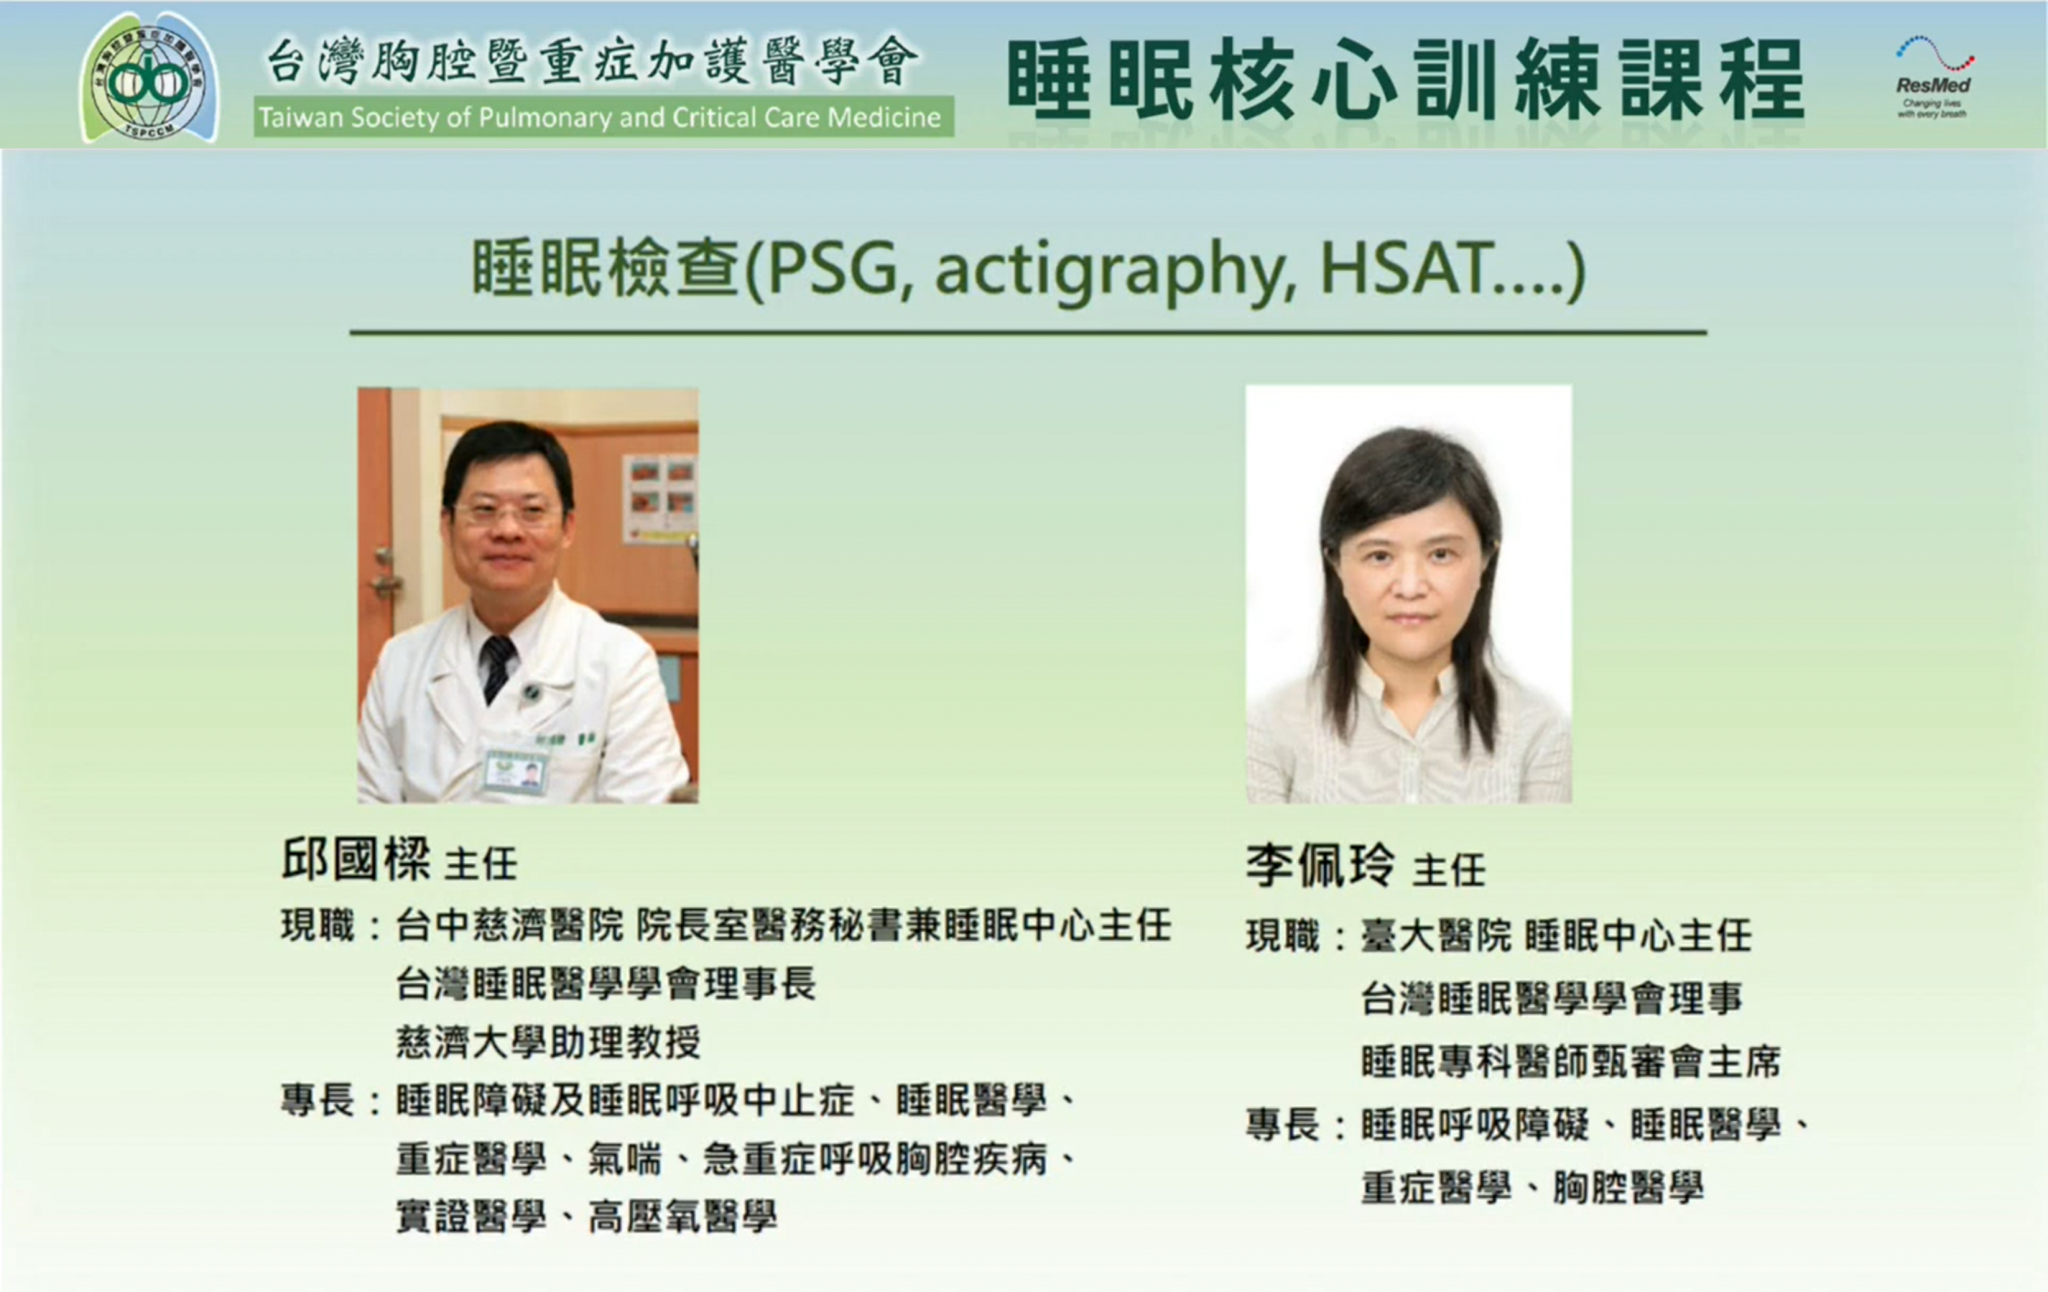 睡眠檢查(PSG, actigraphy, HSAT...)